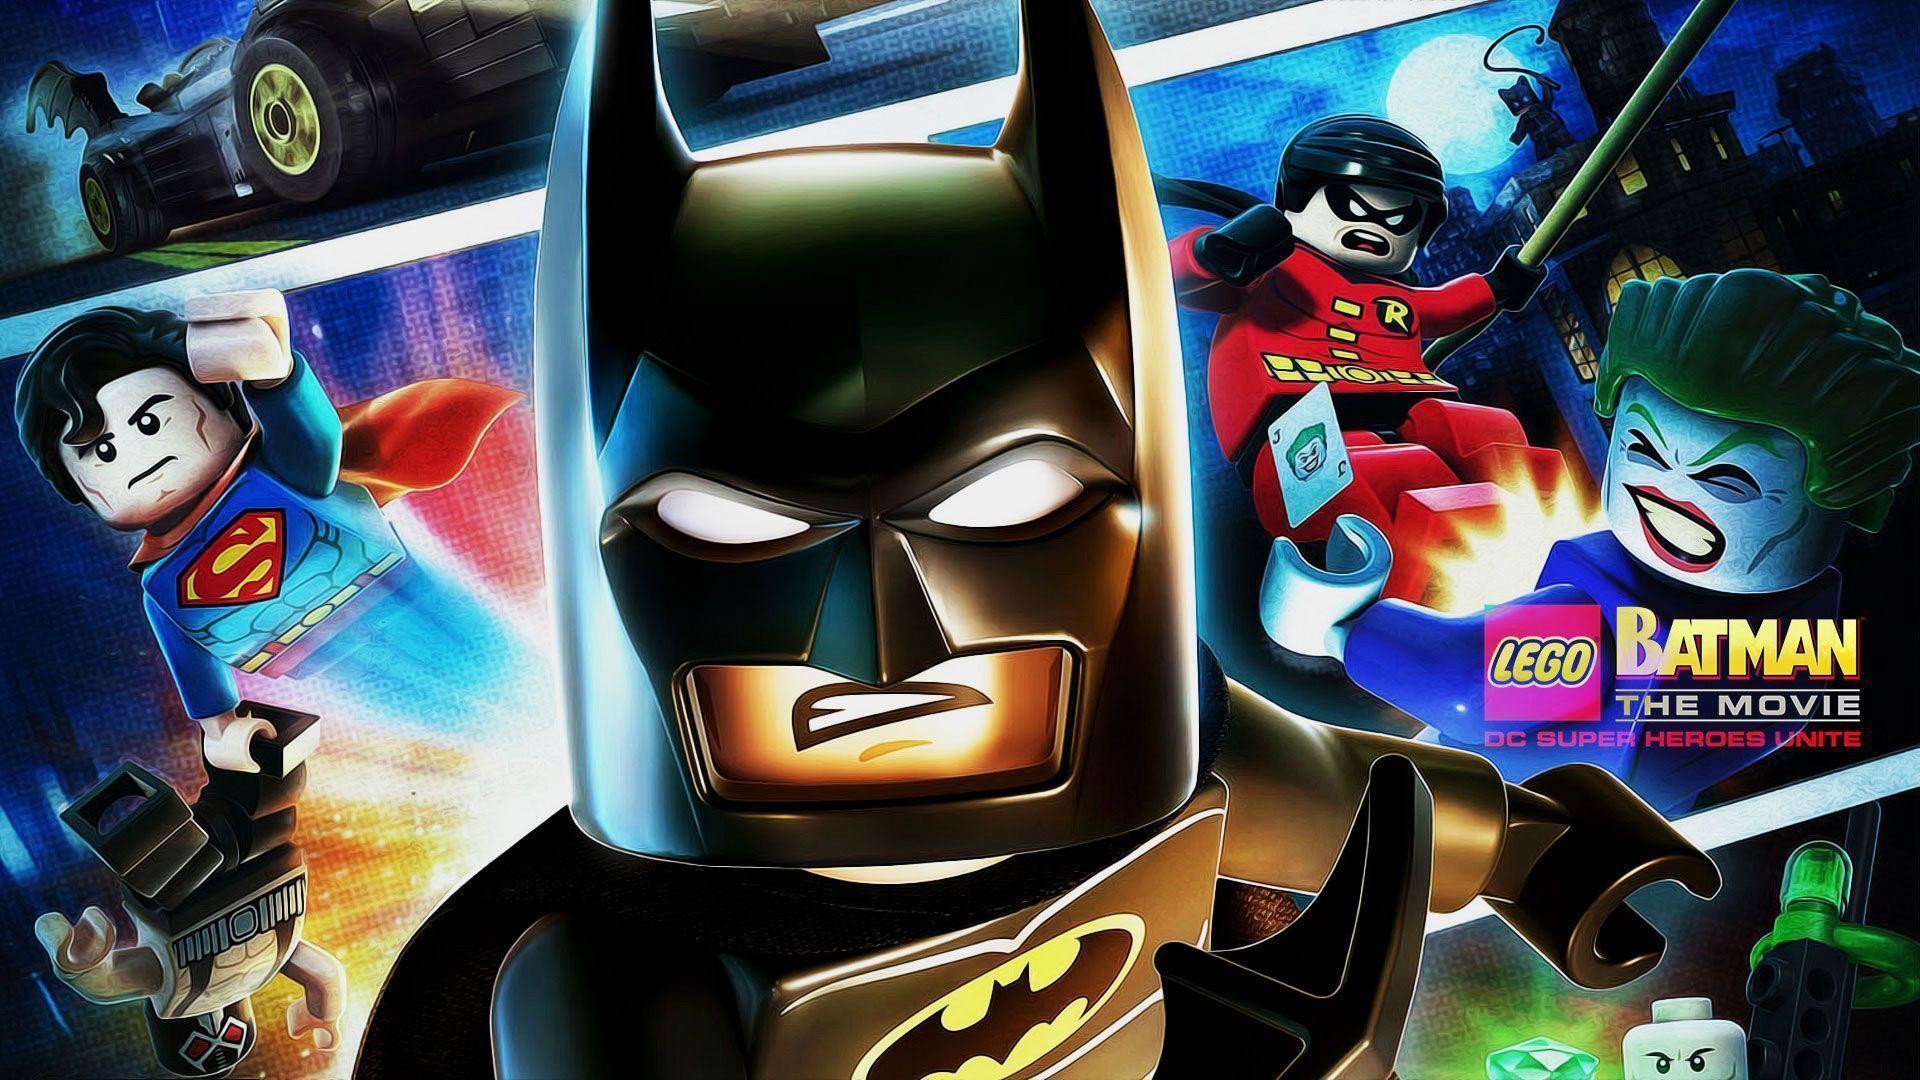 The Lego Batman Movie Wallpaper HD Film 2017 Poster Image 2